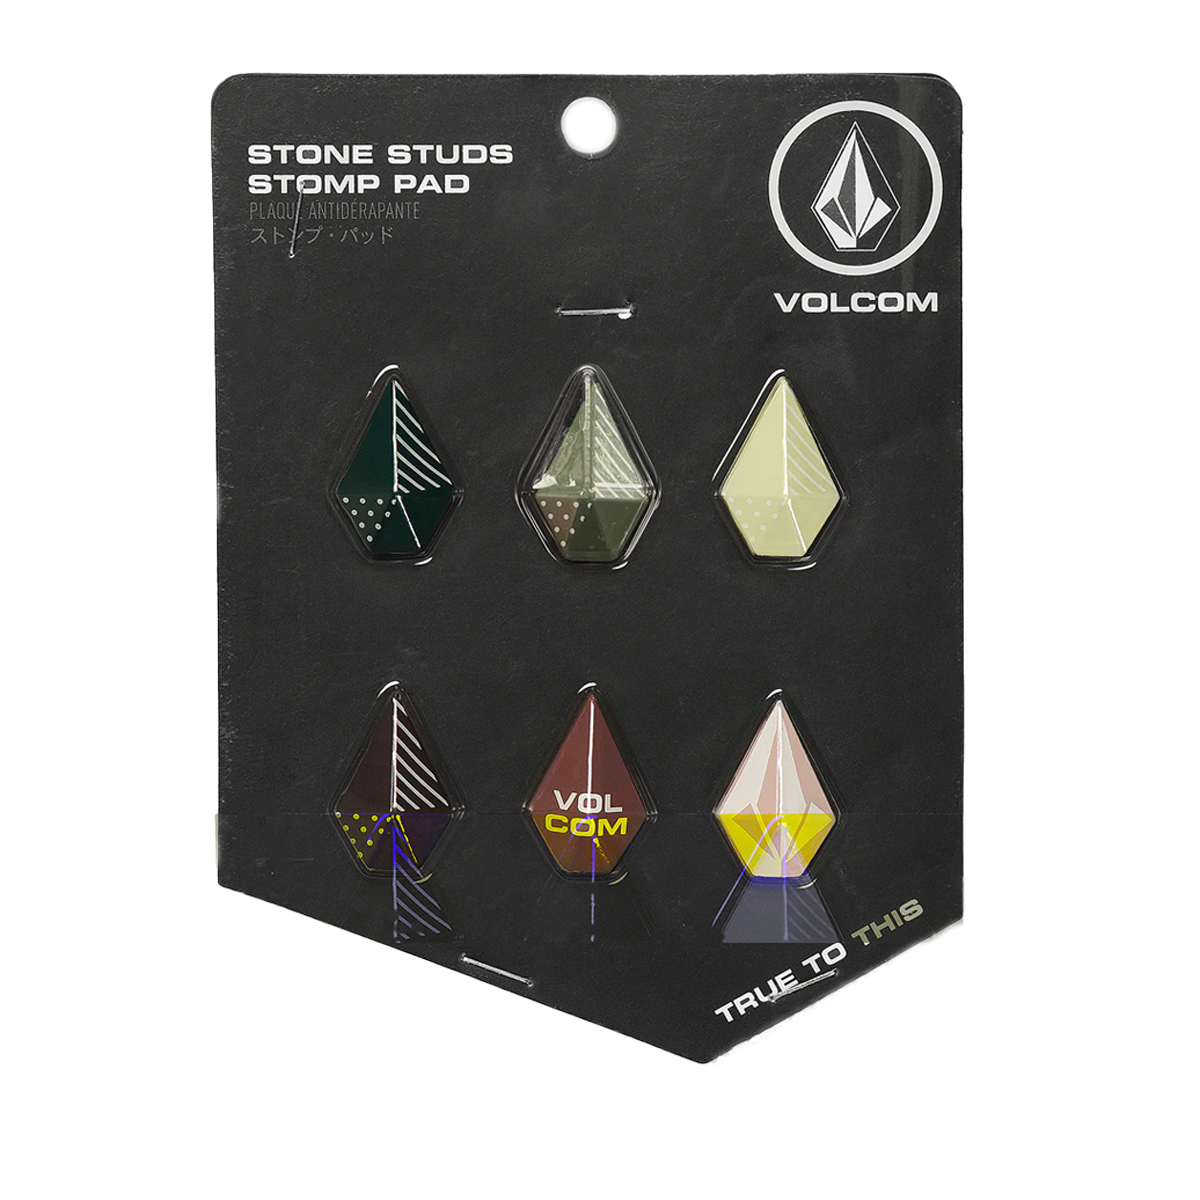 Volcom Stone Studs Stomp Pad - Assorted Colors